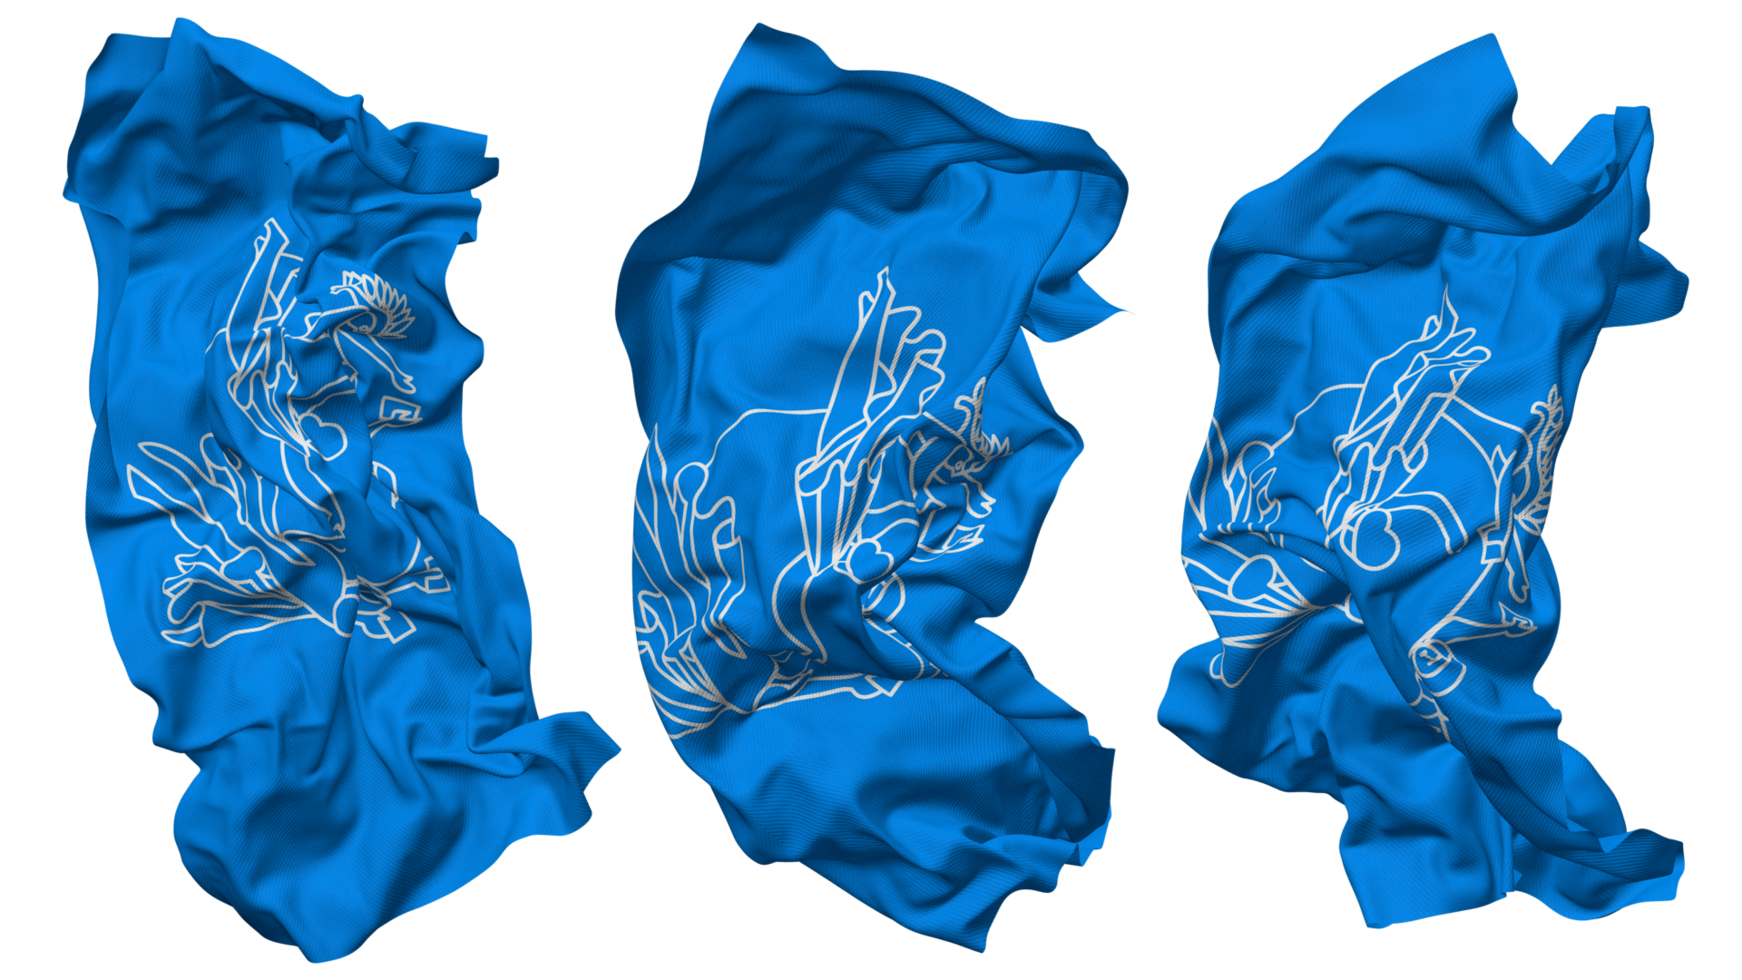 universal postal Unión, arriba bandera olas aislado en diferente estilos con bache textura, 3d representación png